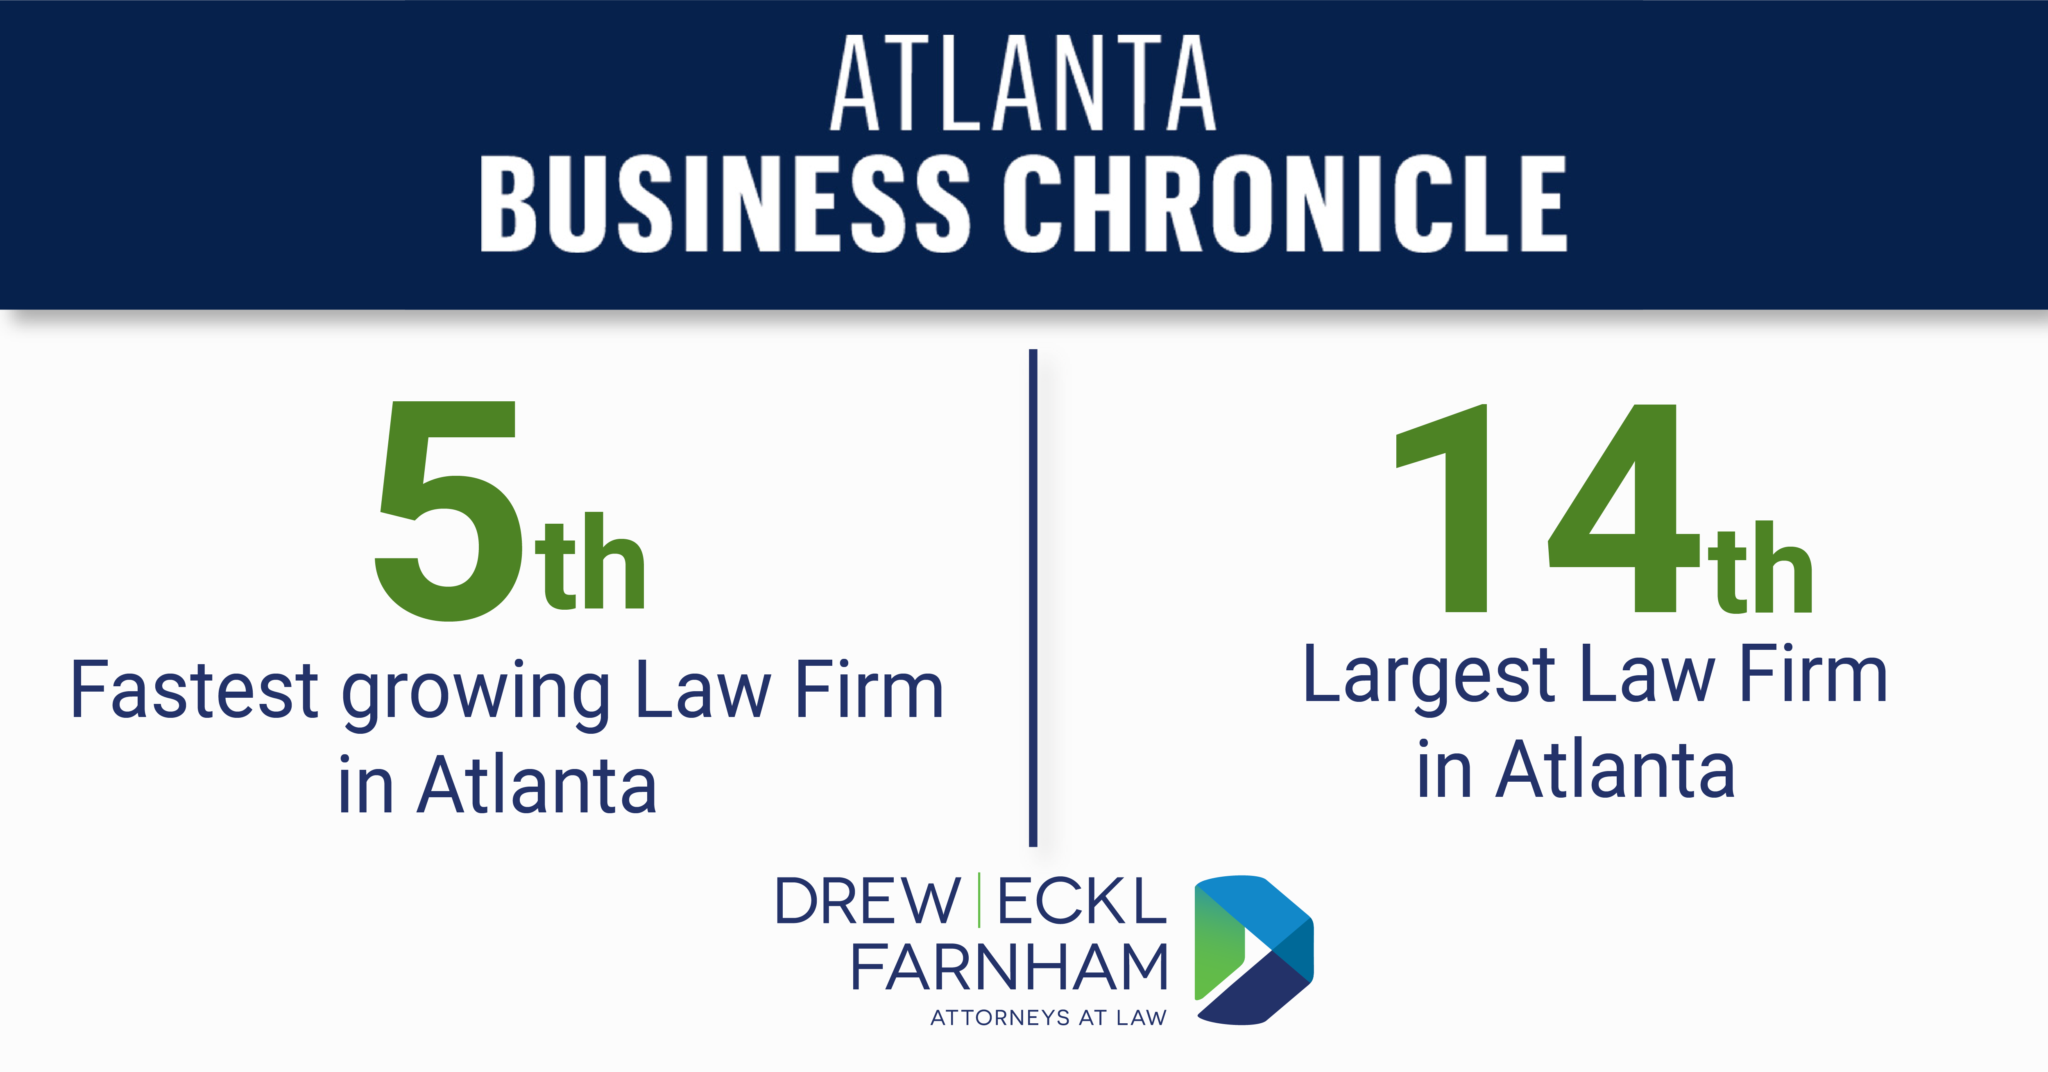 Atlanta Business Chronicle Drew Eckl & Farnham, LLP